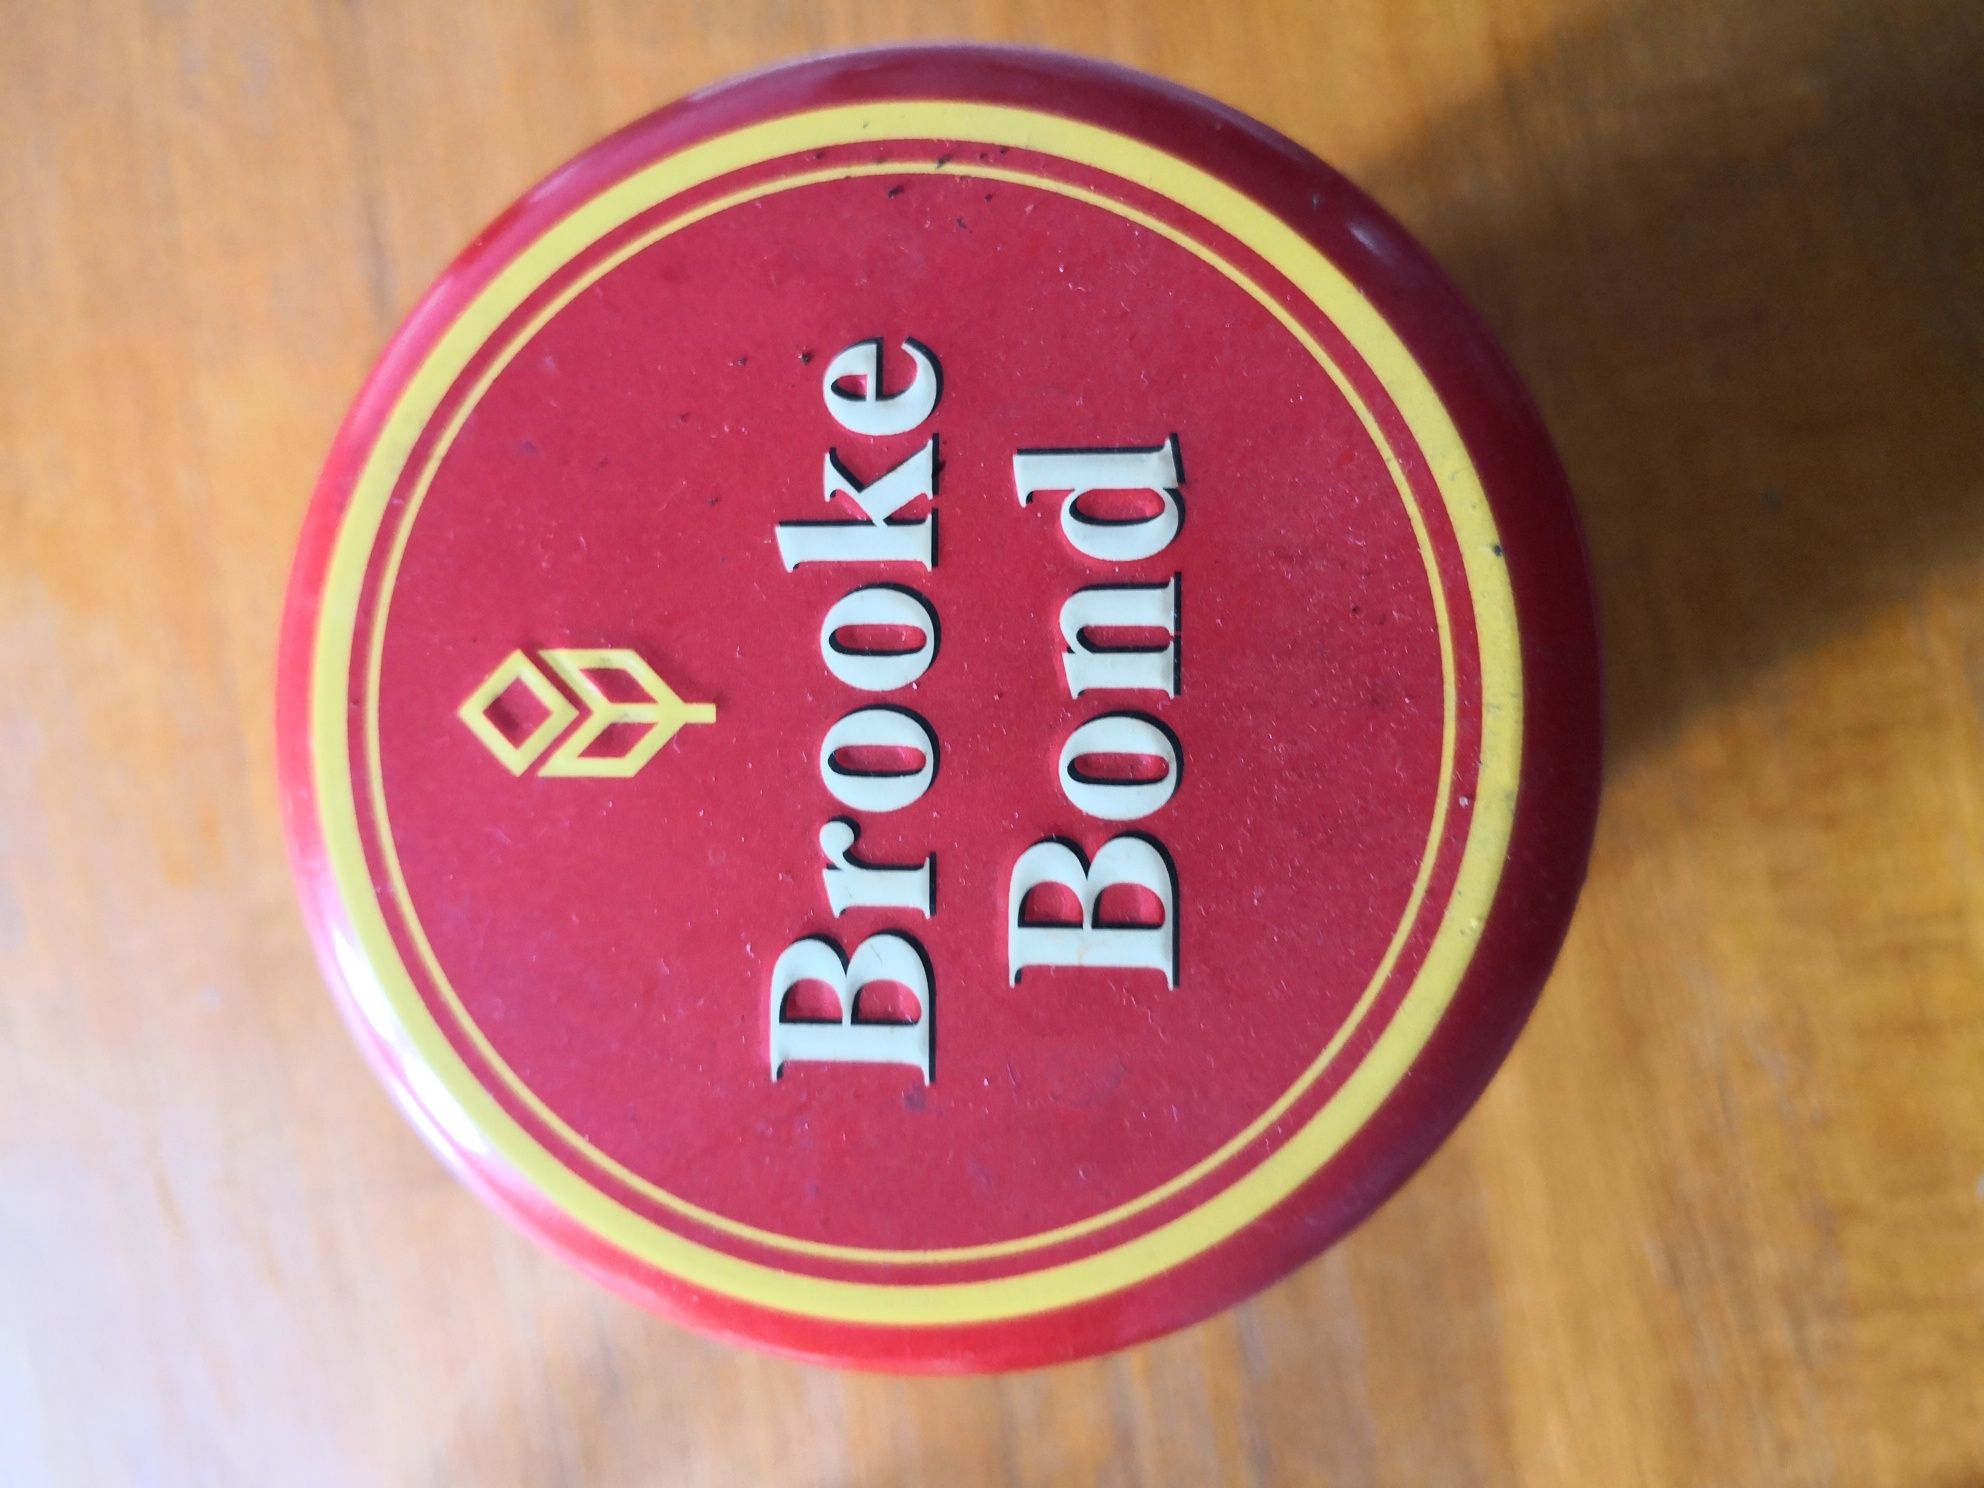 Puszka po herbacie Brooke Bond, Kolekcjonerska